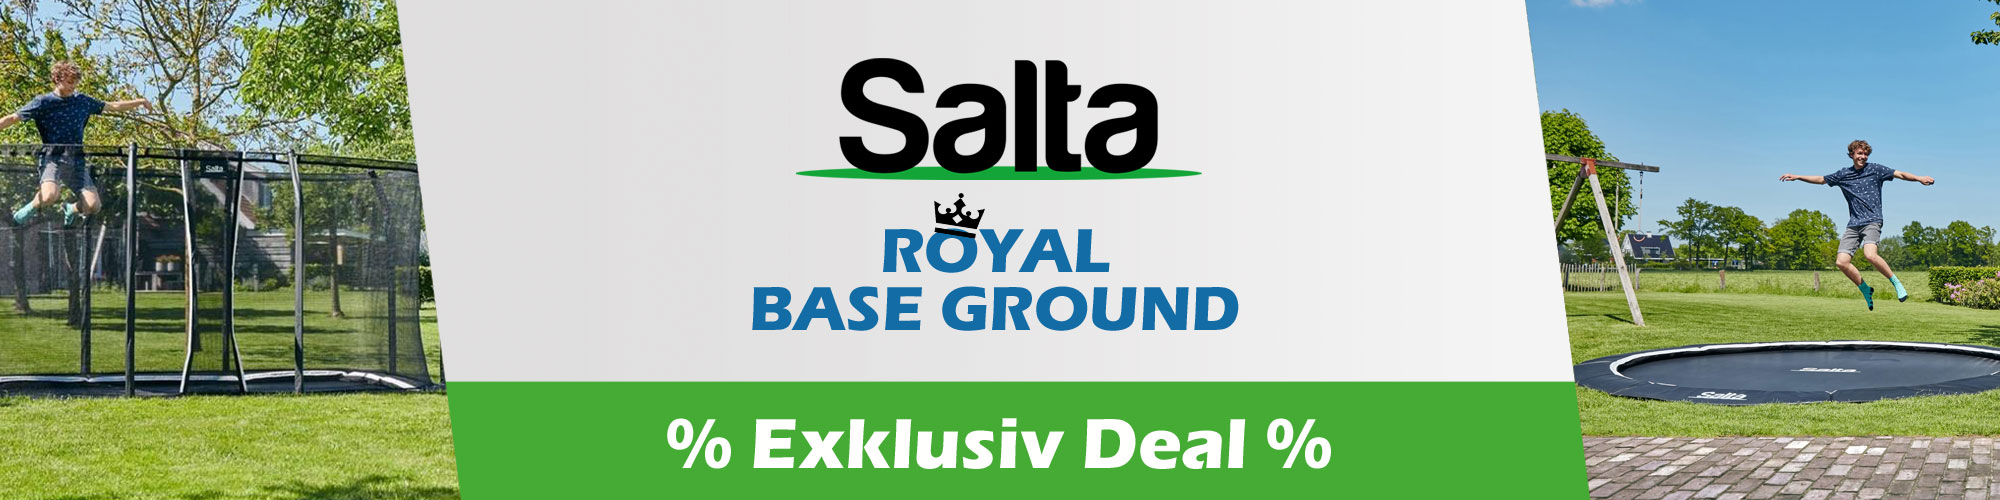 SALTA ROYAL BASE GROUND